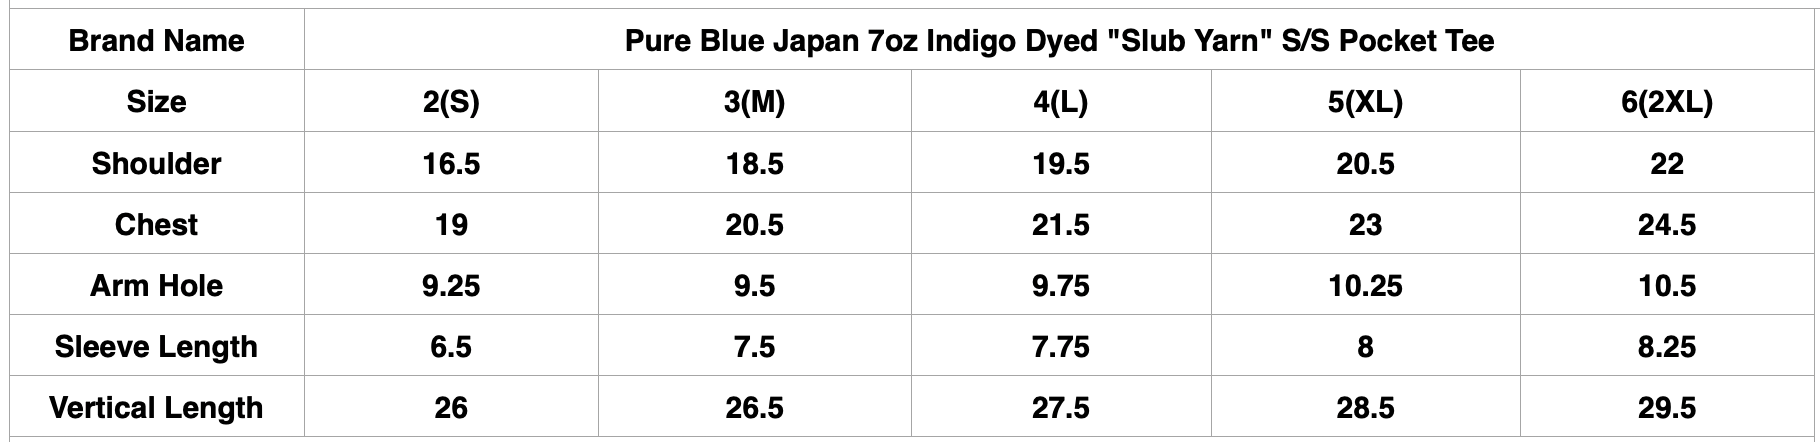 Pure Blue Japan 7oz Indigo Dyed "Slub Yarn" S/S Pocket Tee